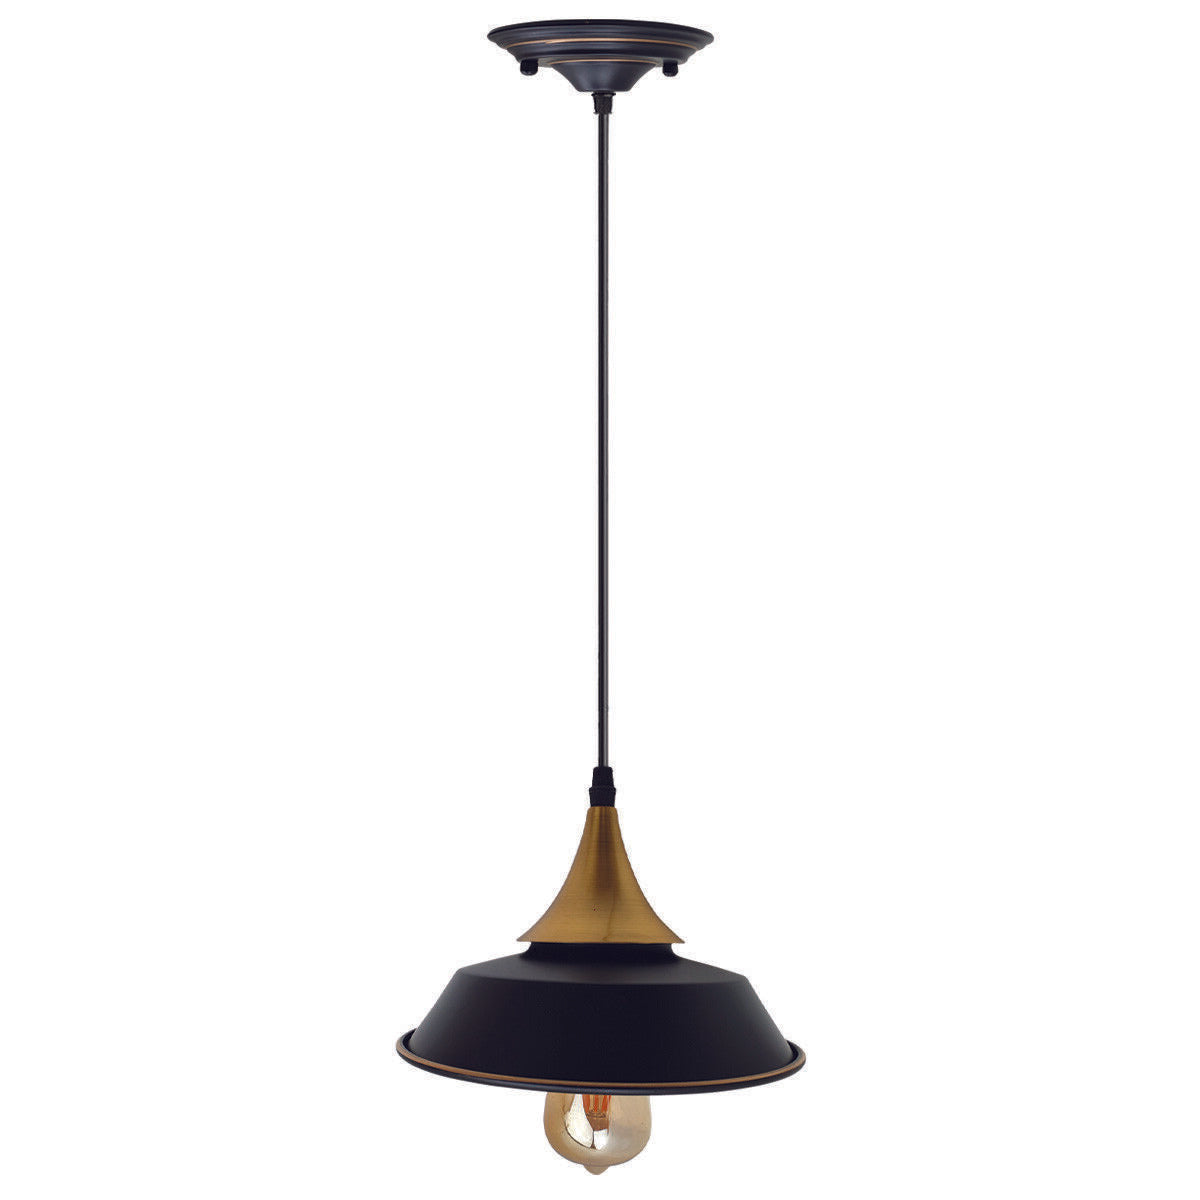 Vintage Ceiling Pendant Light Lamp Shade  Bowl Shape Black - Vintagelite